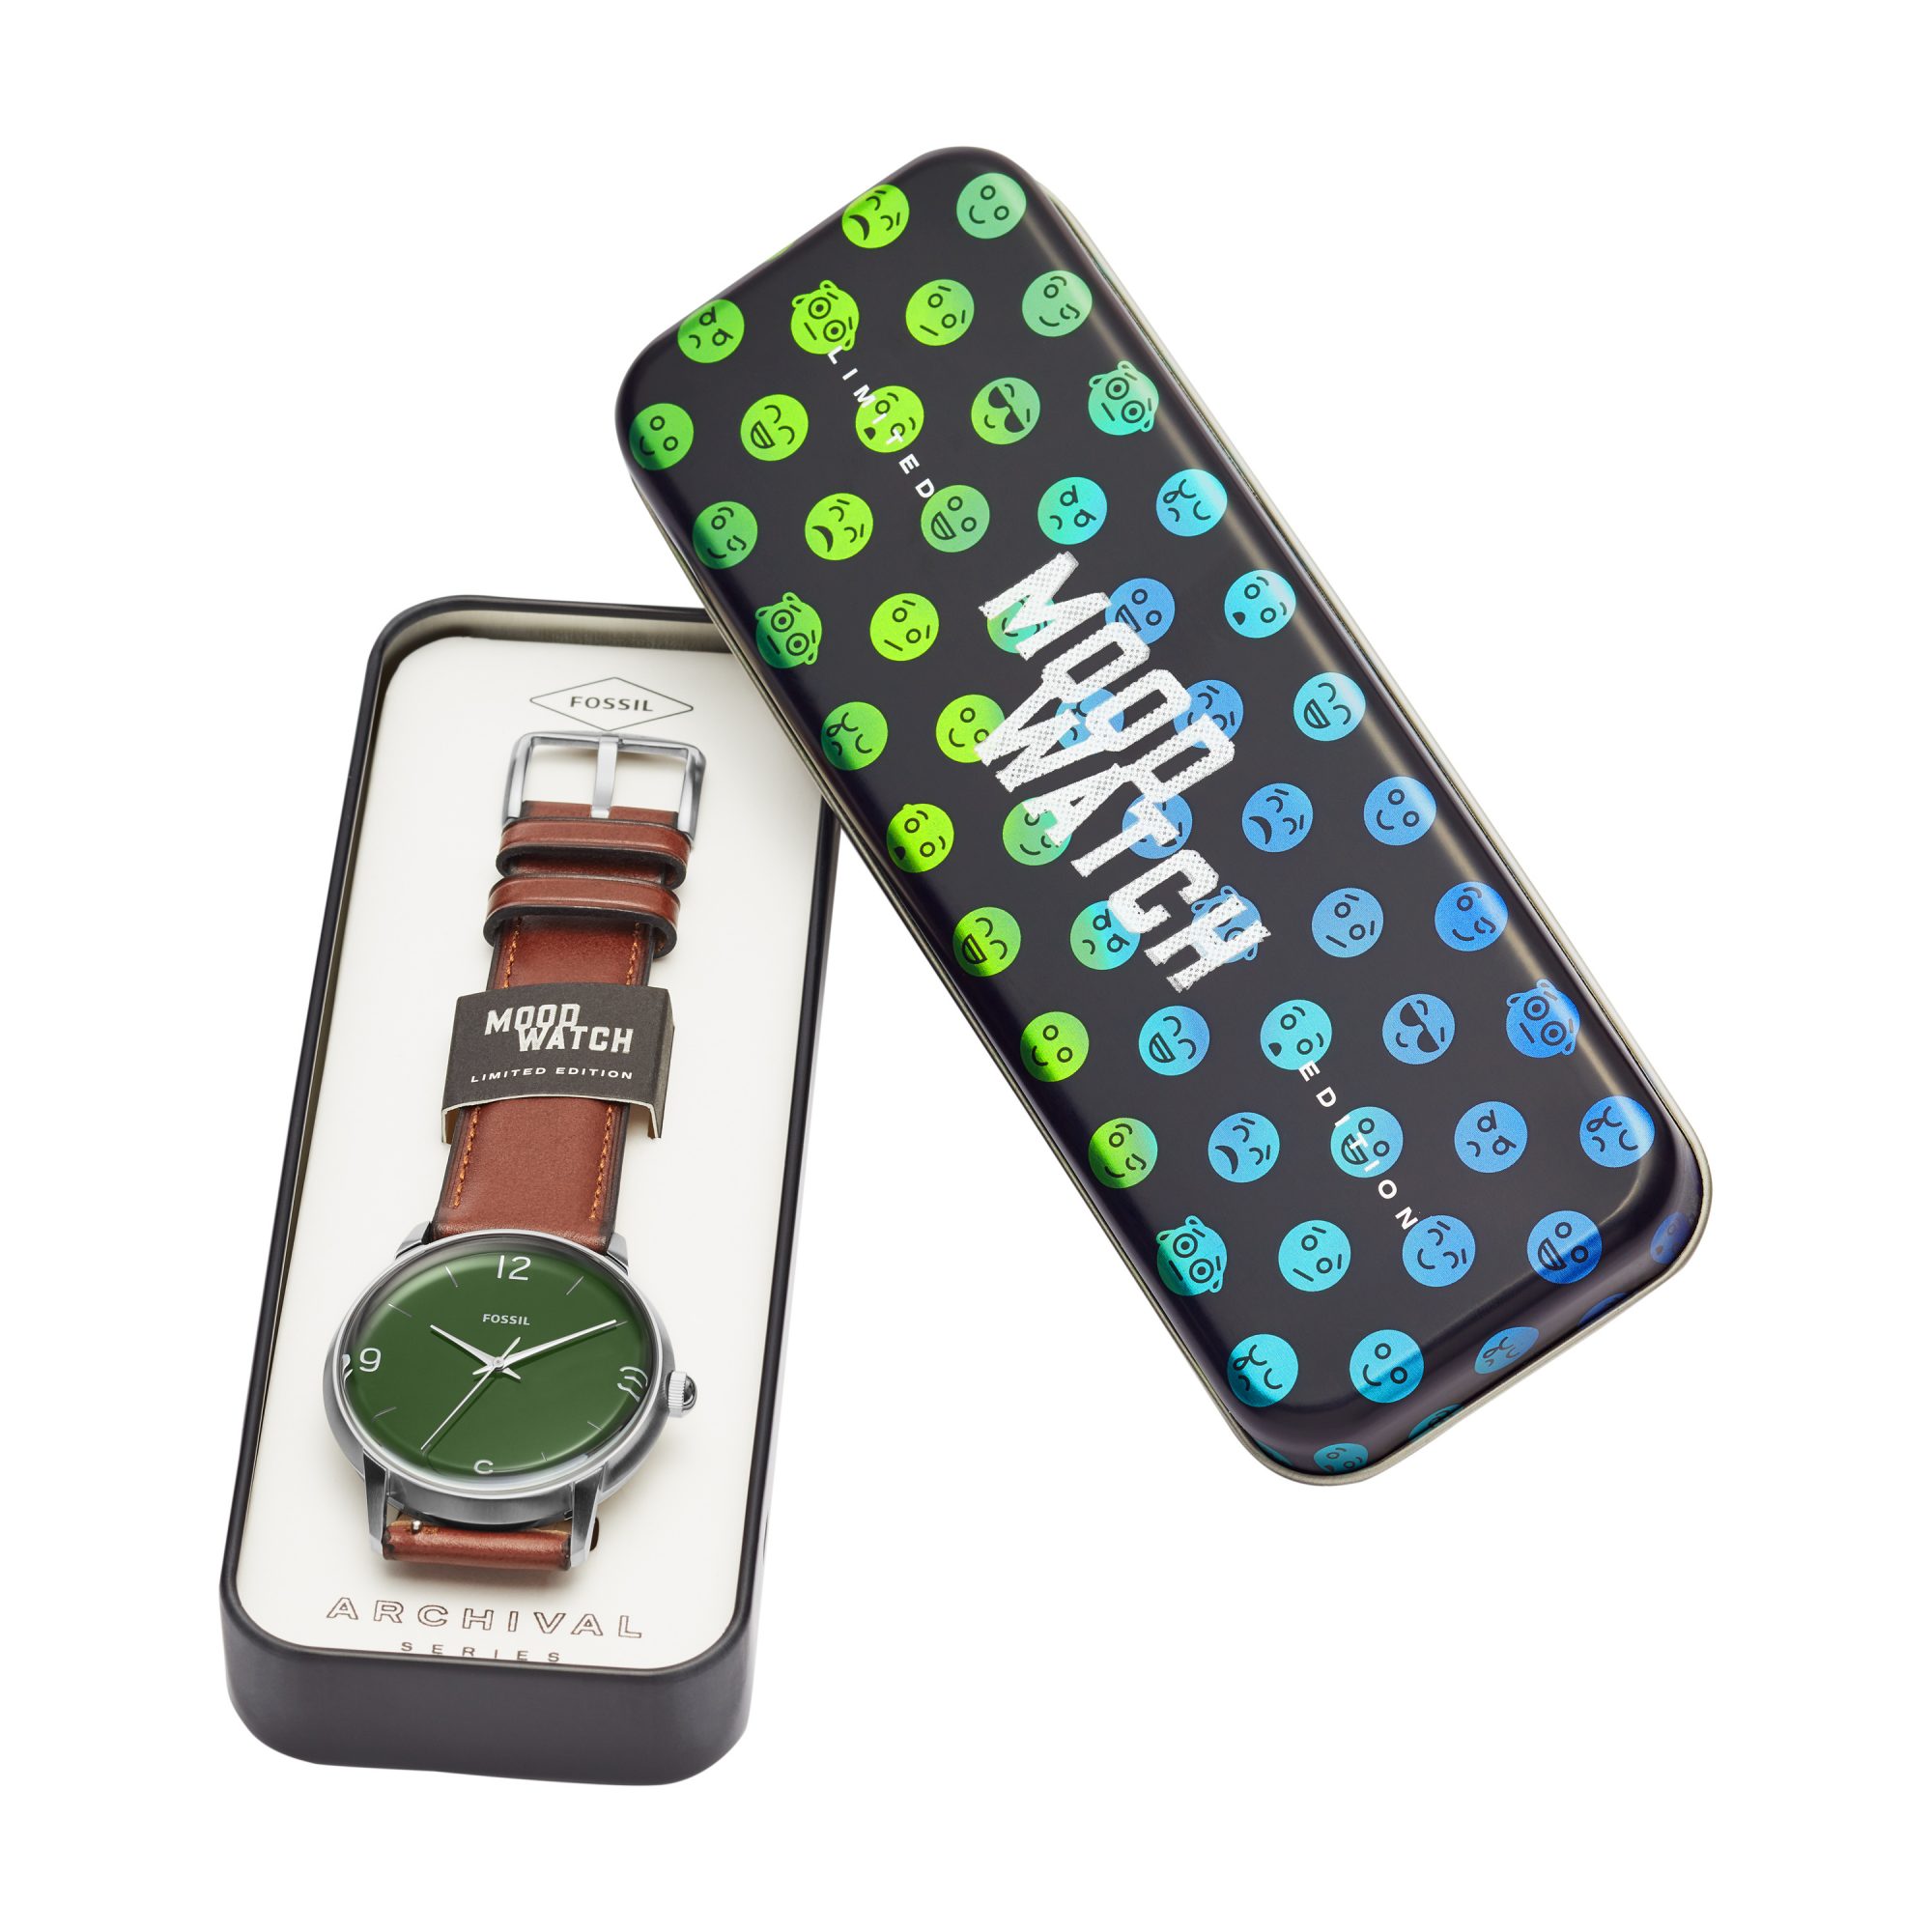 Spiky Chimera Kids Smart Watch Colorful Mood Light Blue, Hand Watch, हाथ की  घड़ी, रिस्ट वाच - Purab Enterprises, Ghaziabad | ID: 2852910459073